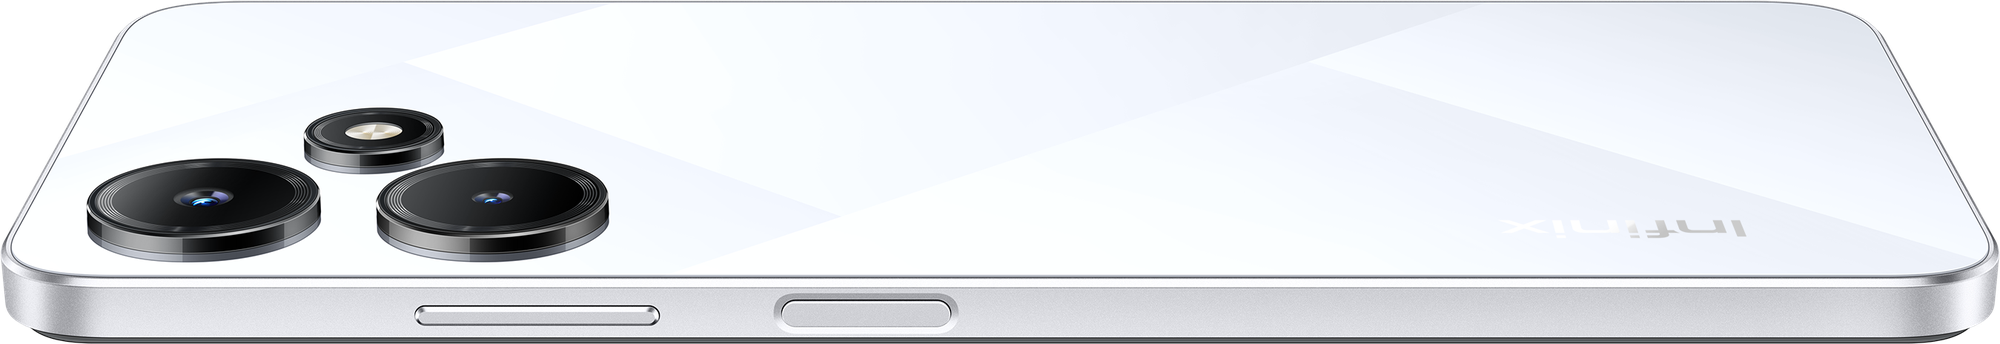 Смартфон Infinix HOT 30i 8/128 GB Diamond White